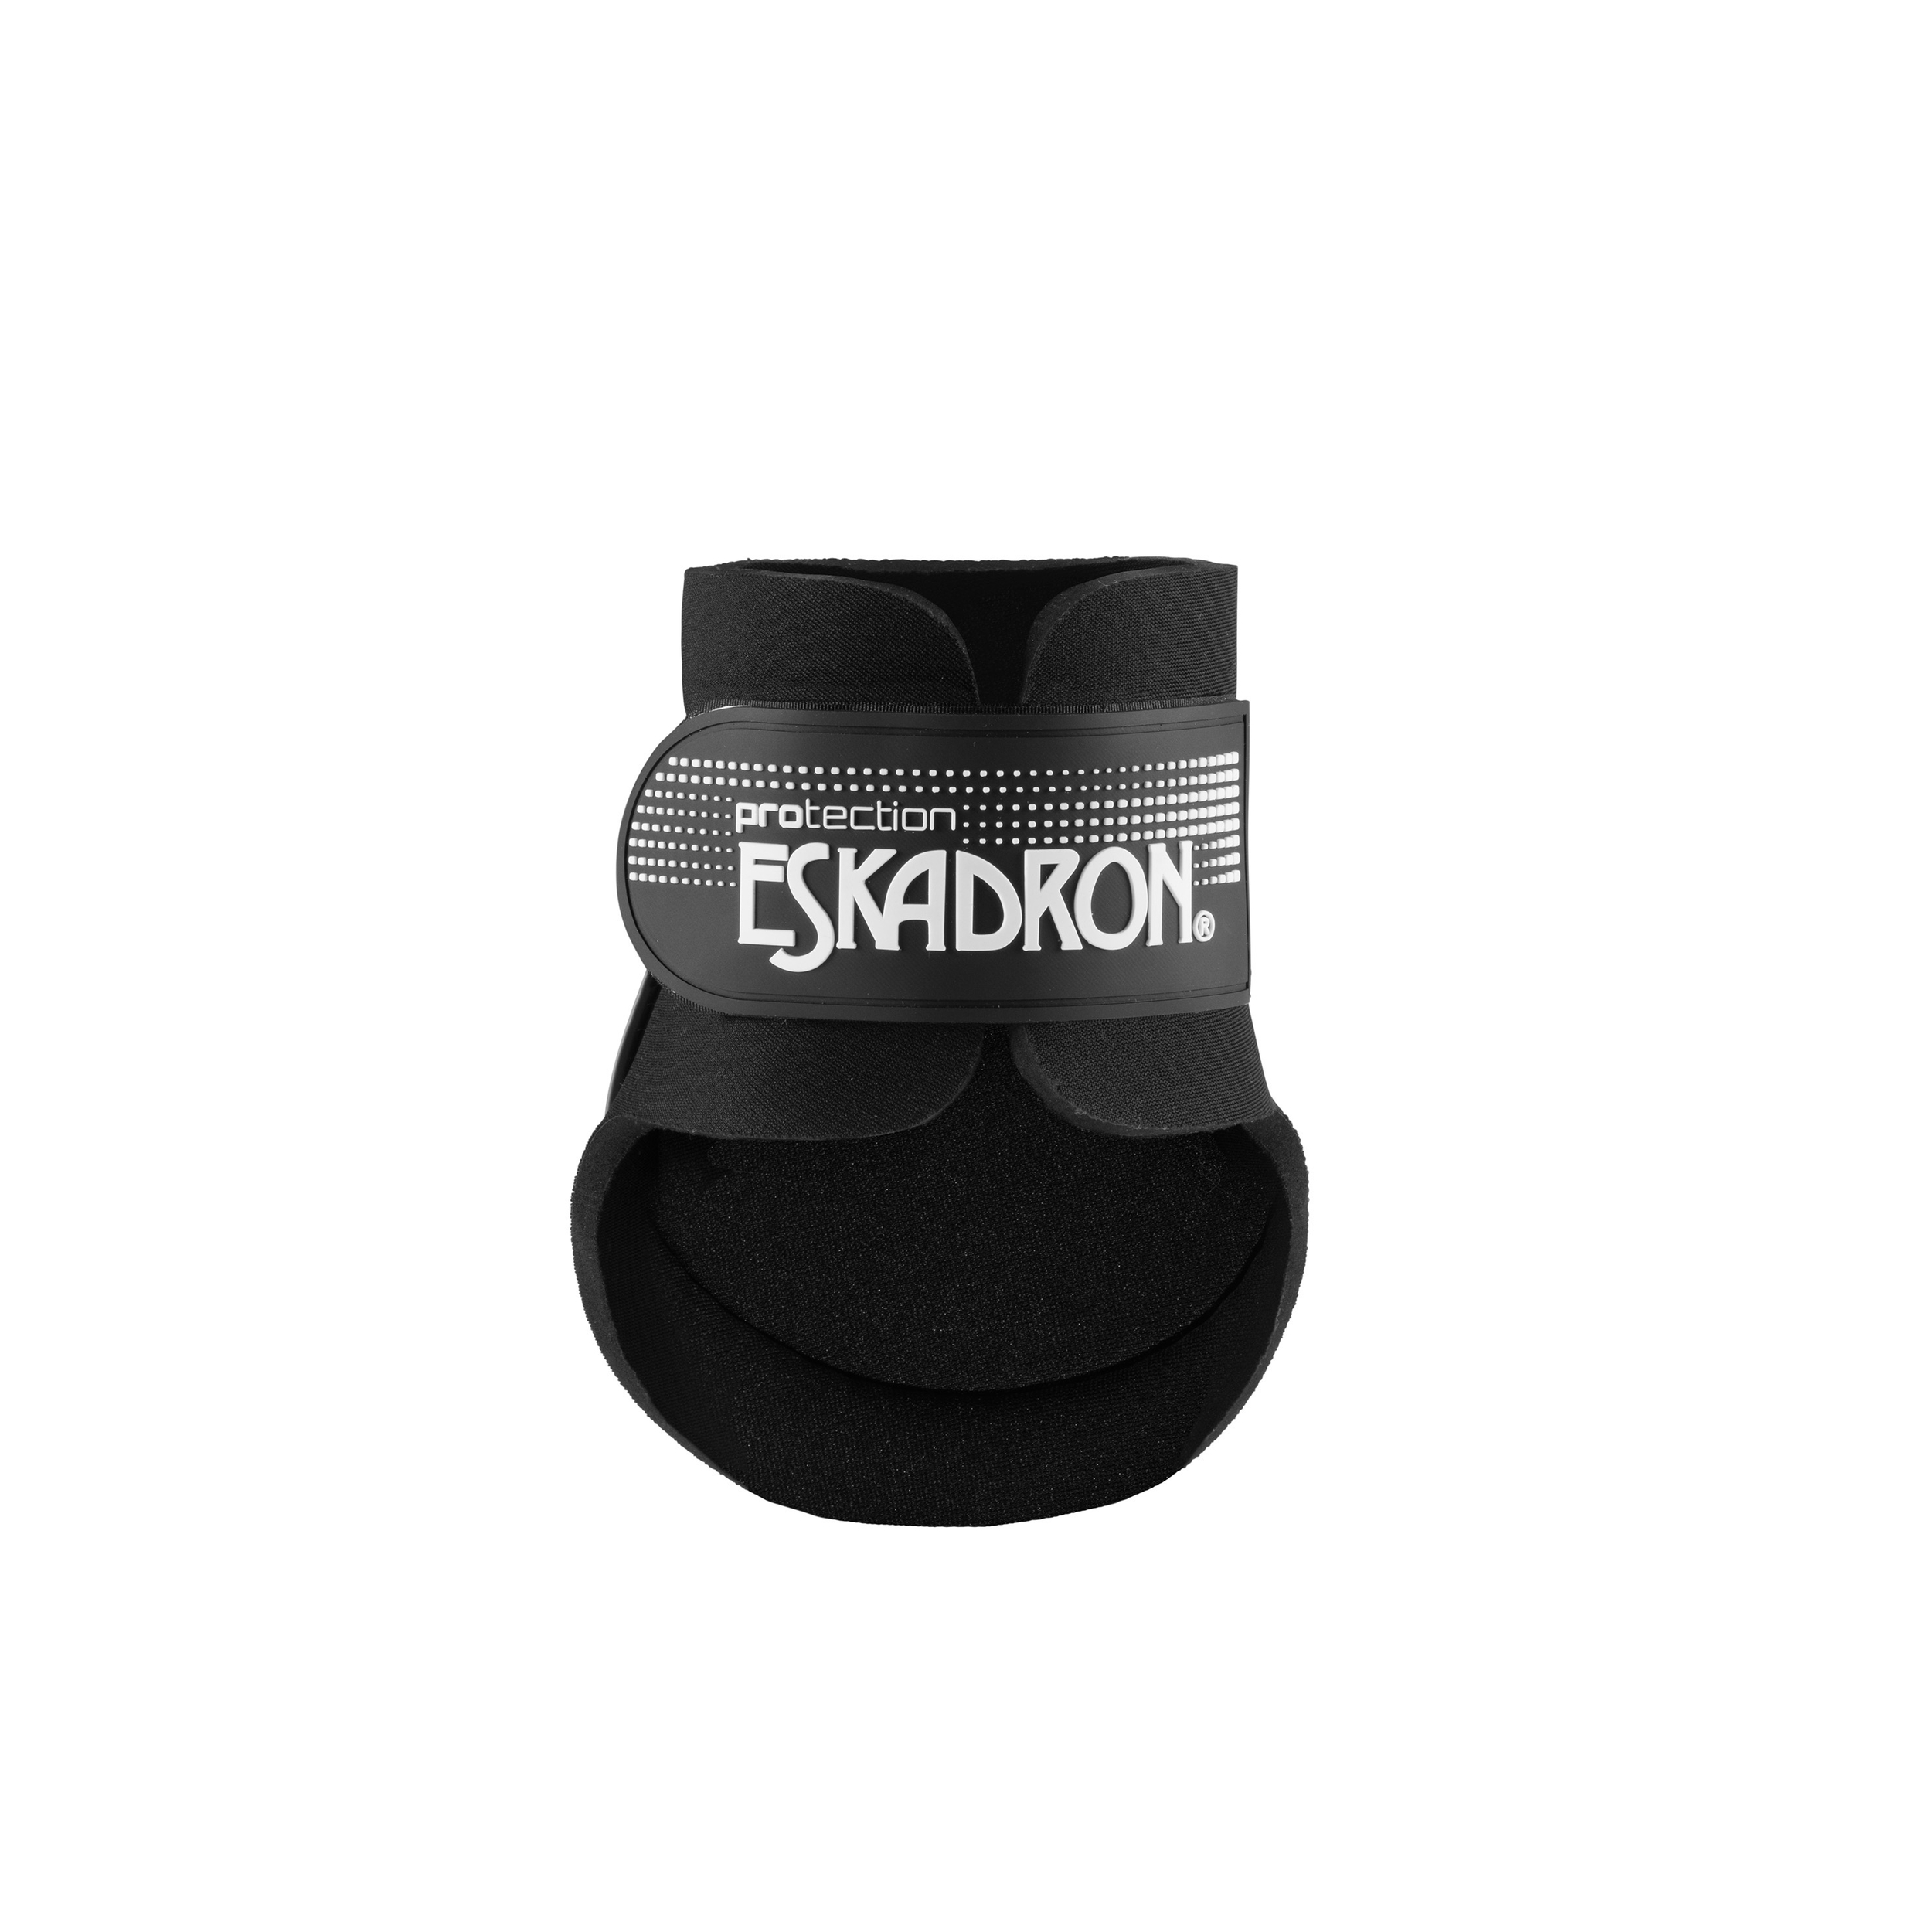 ESKADRON Basics Streichkappen Protection hinten - darkbrown - WB - 8